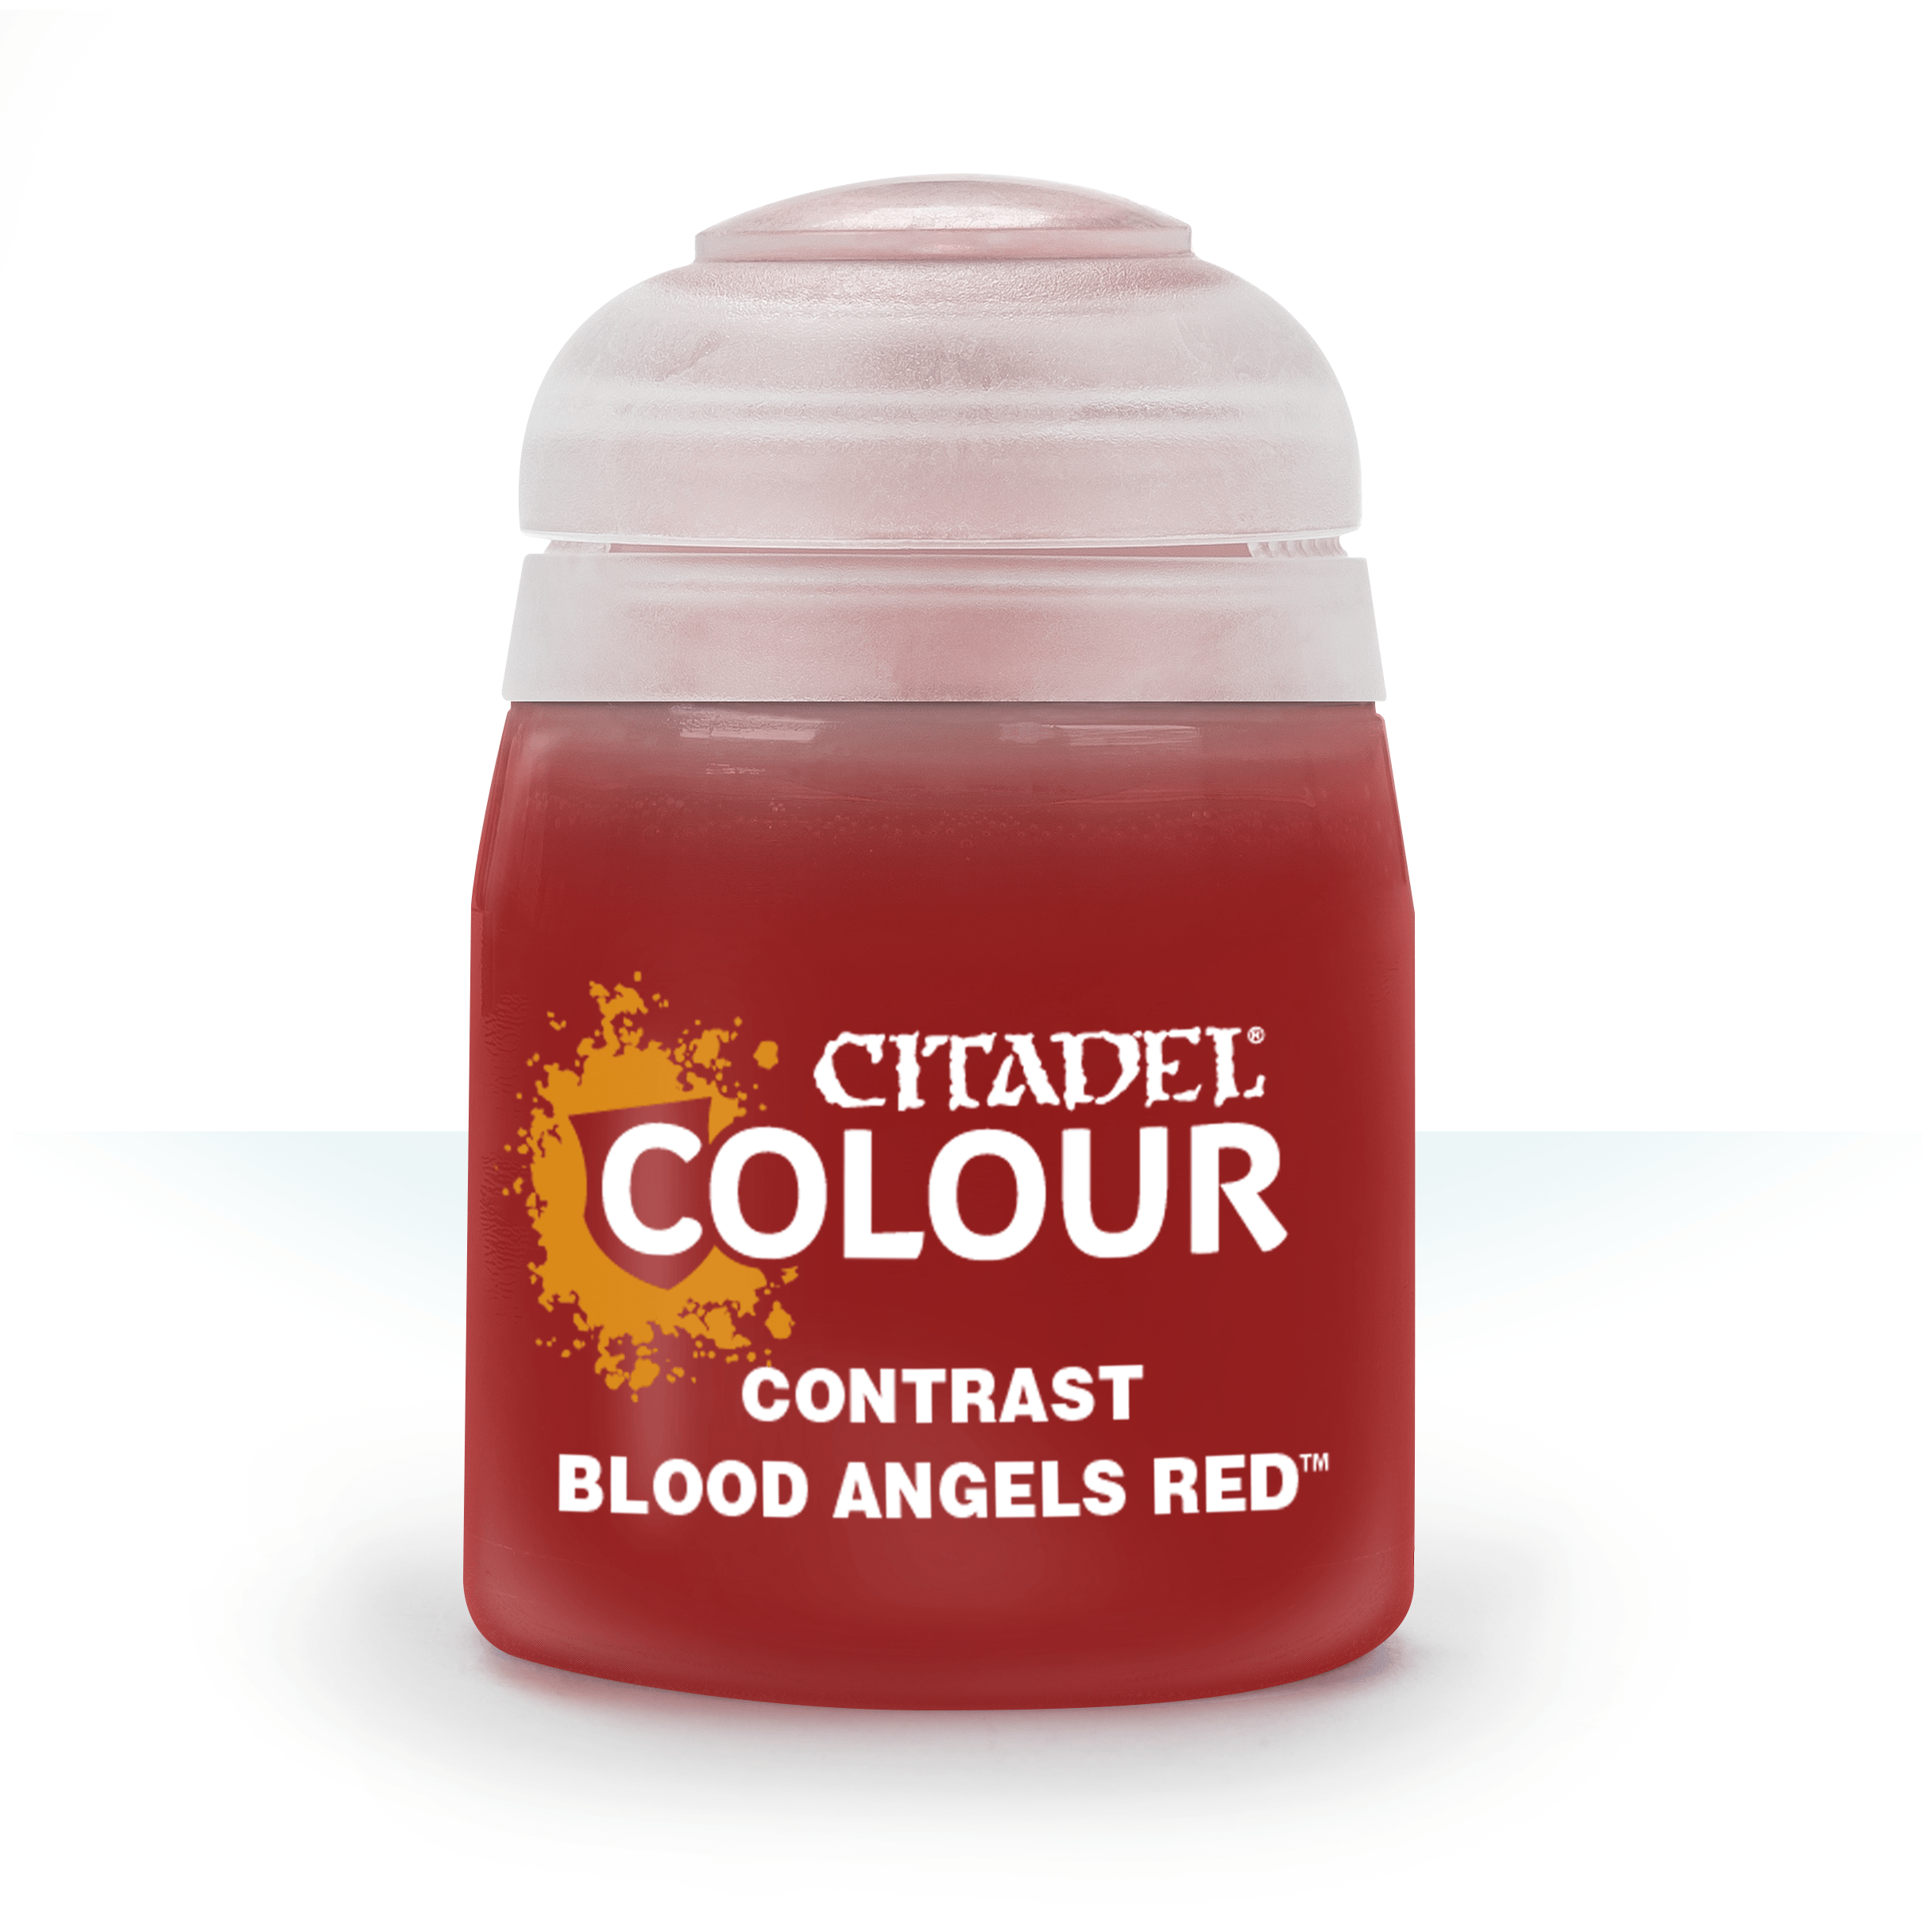 CITADEL CONTRAST BLOOD ANGELS RED | Impulse Games and Hobbies